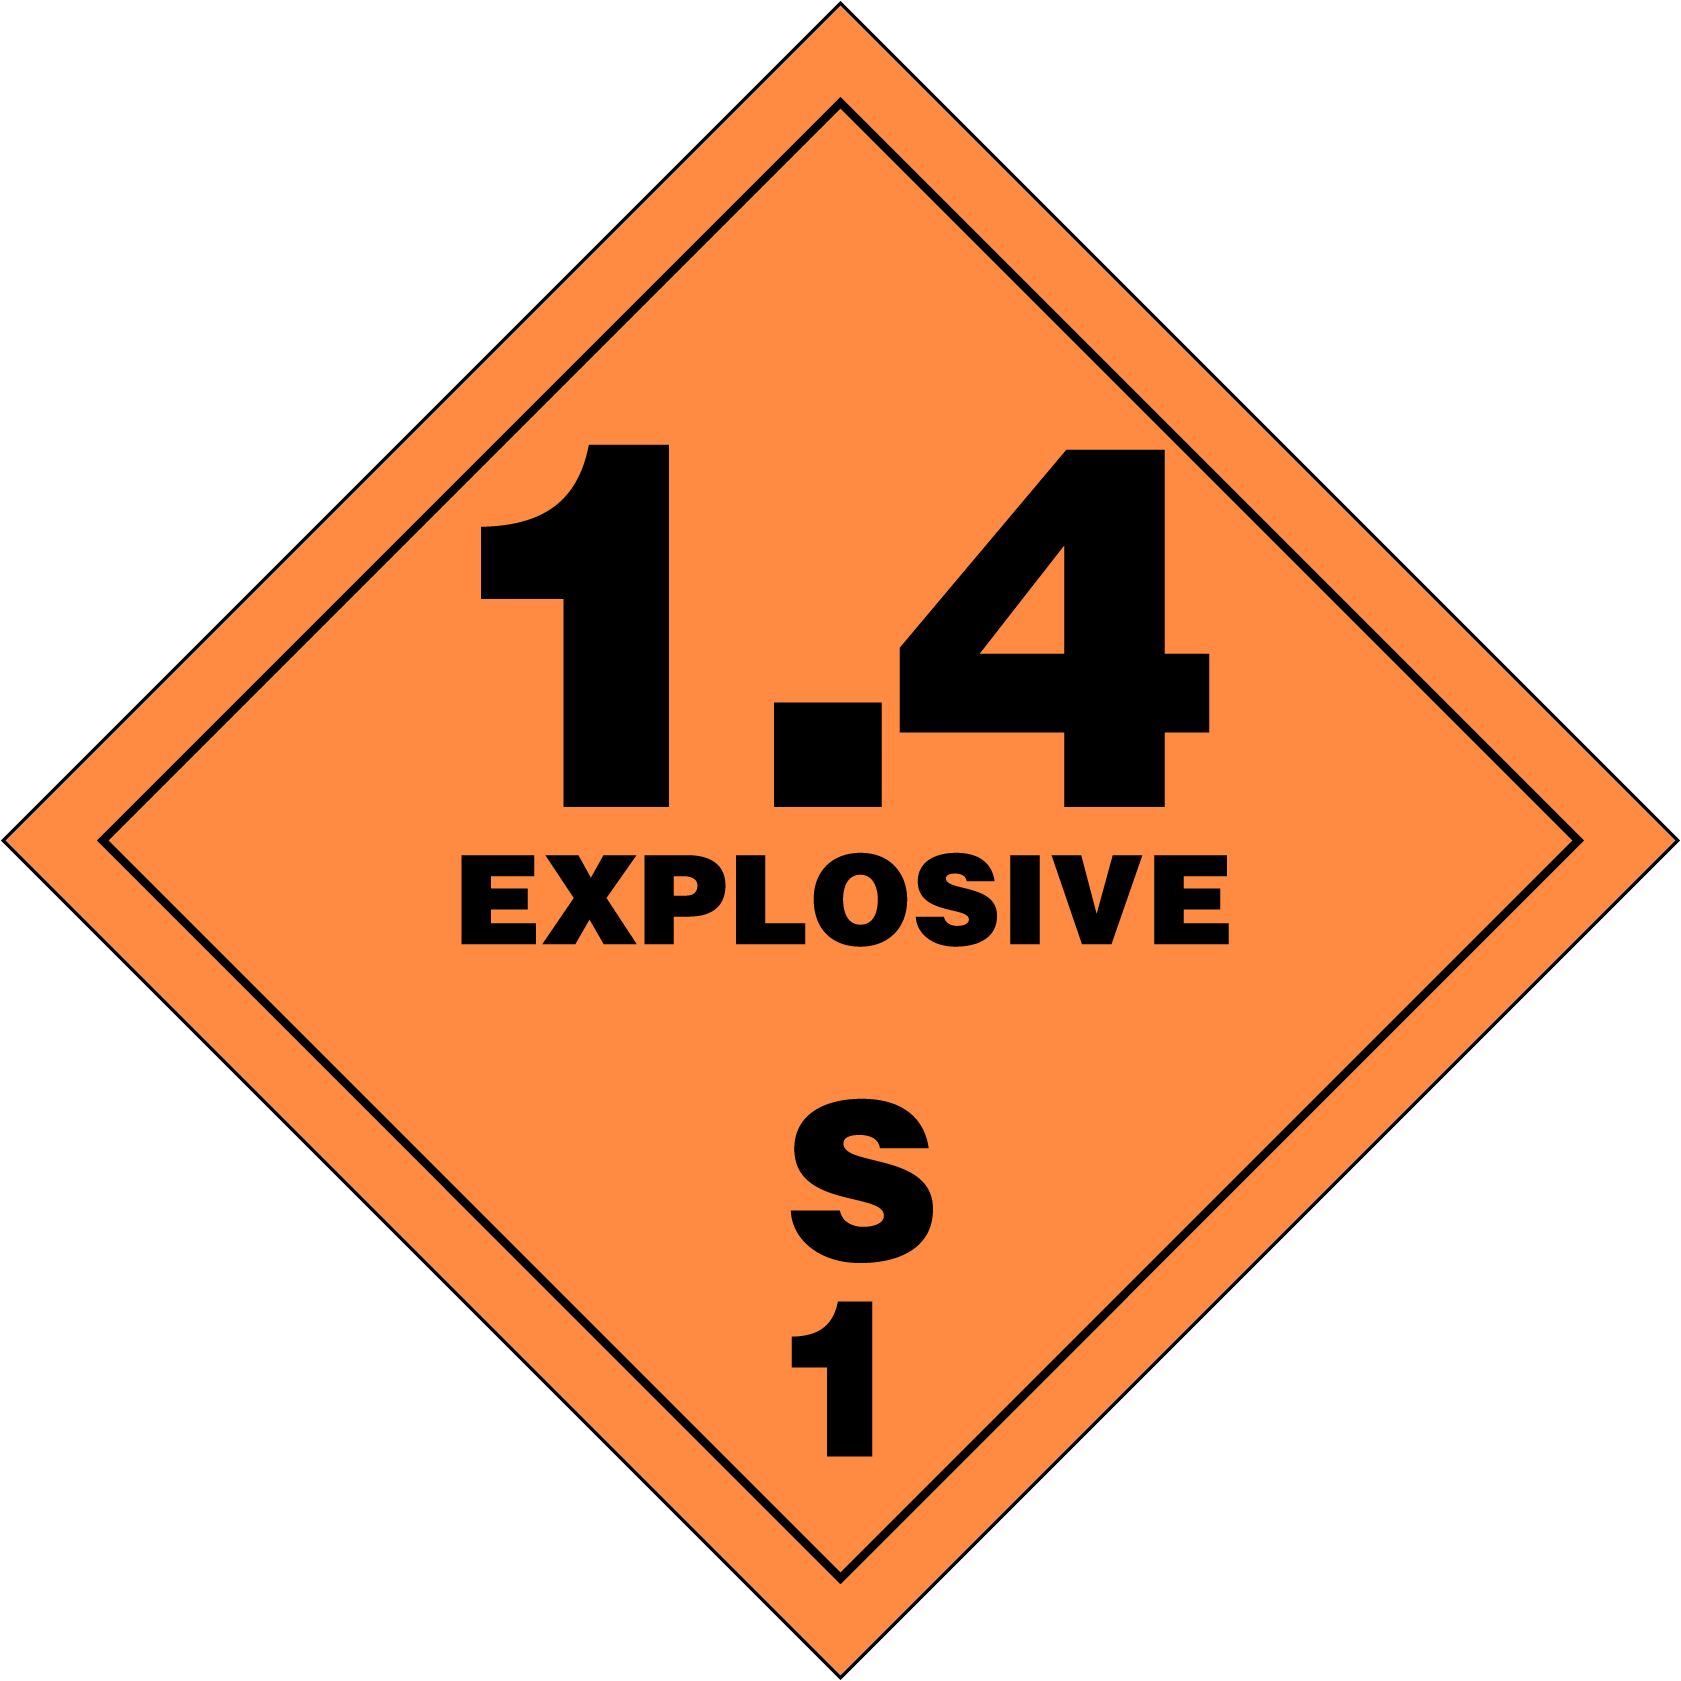 Explosives (1.4S)